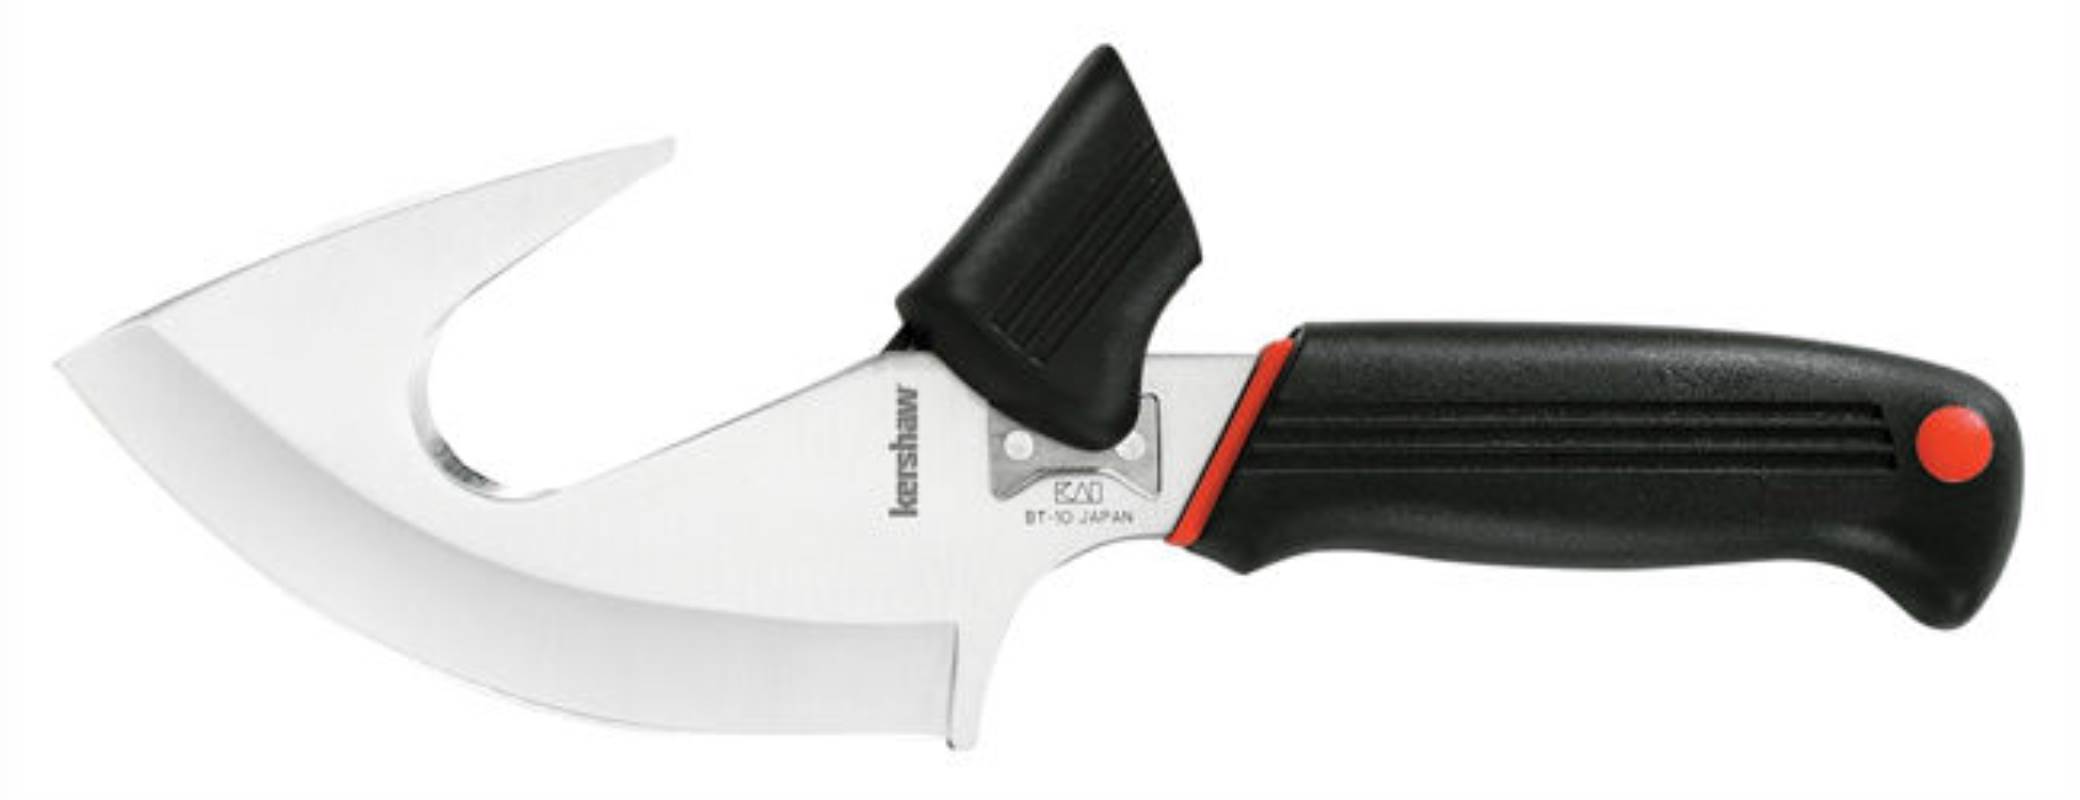 Sold - Kershaw Blade Trader Set F/S (price reduced)